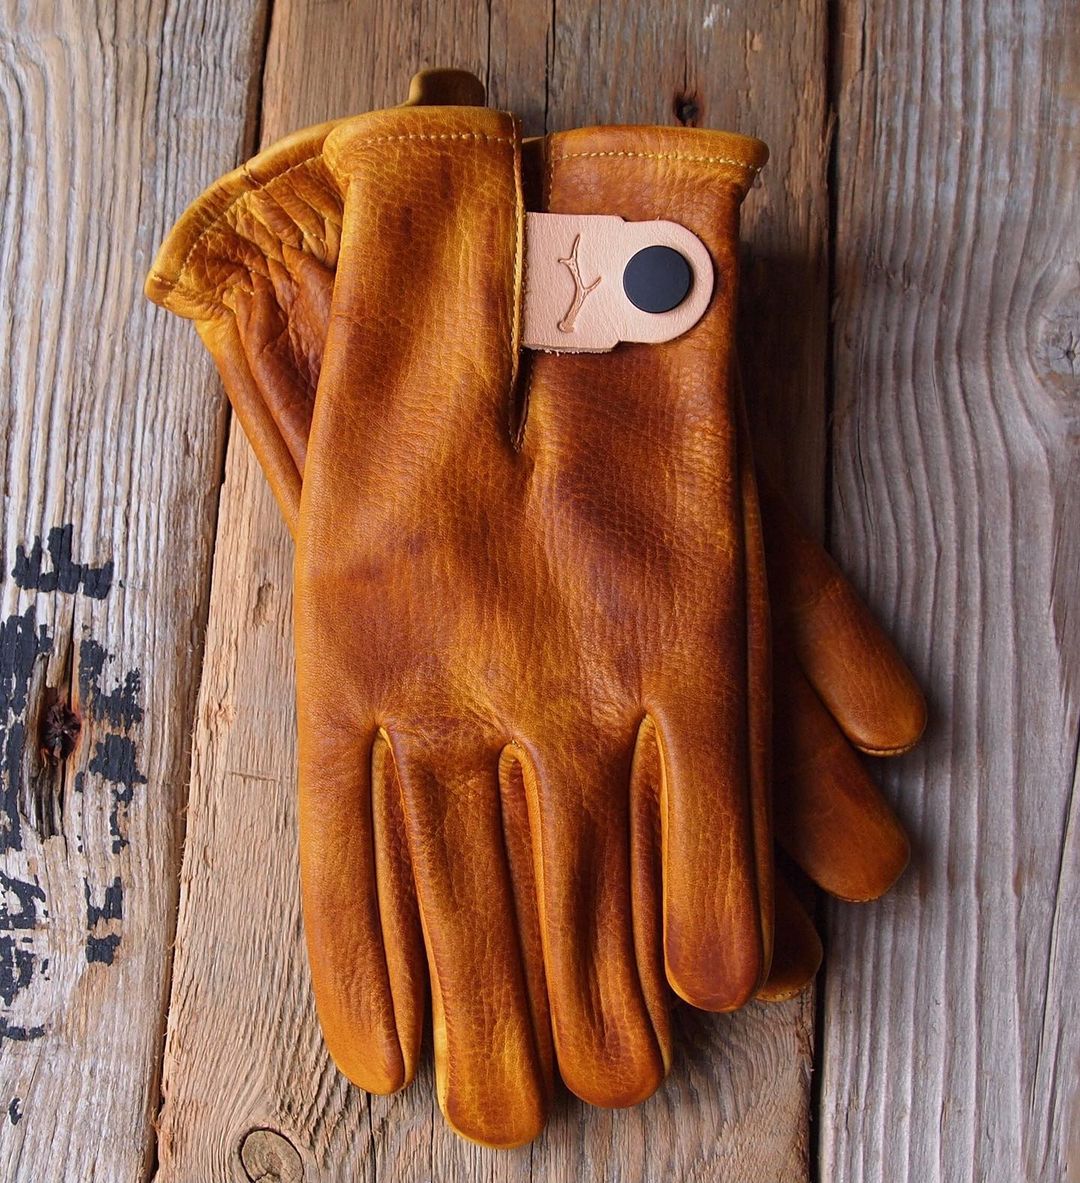 Кожаные перчатки Crud Rider gloves, Natural для туризма, бушкрафта, города